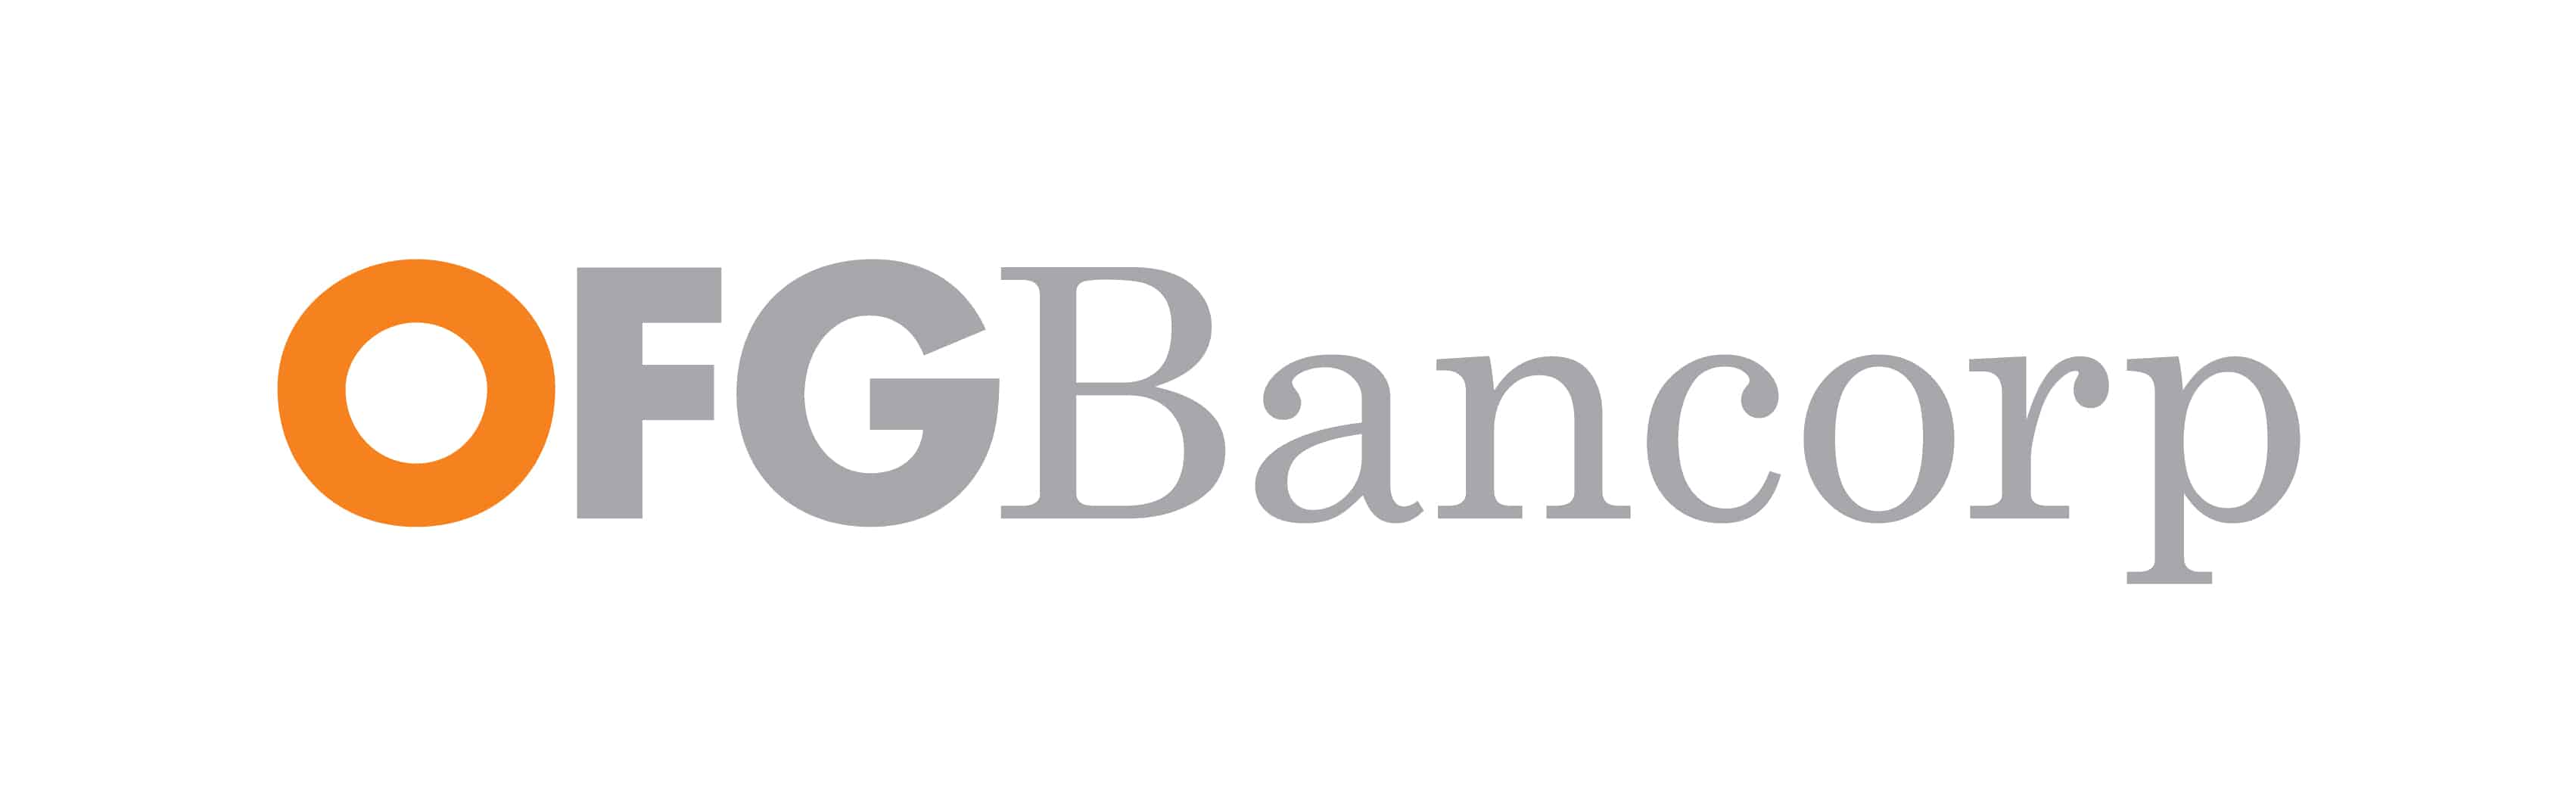 Free Stock Pick: OFG Bancorp (OFG)